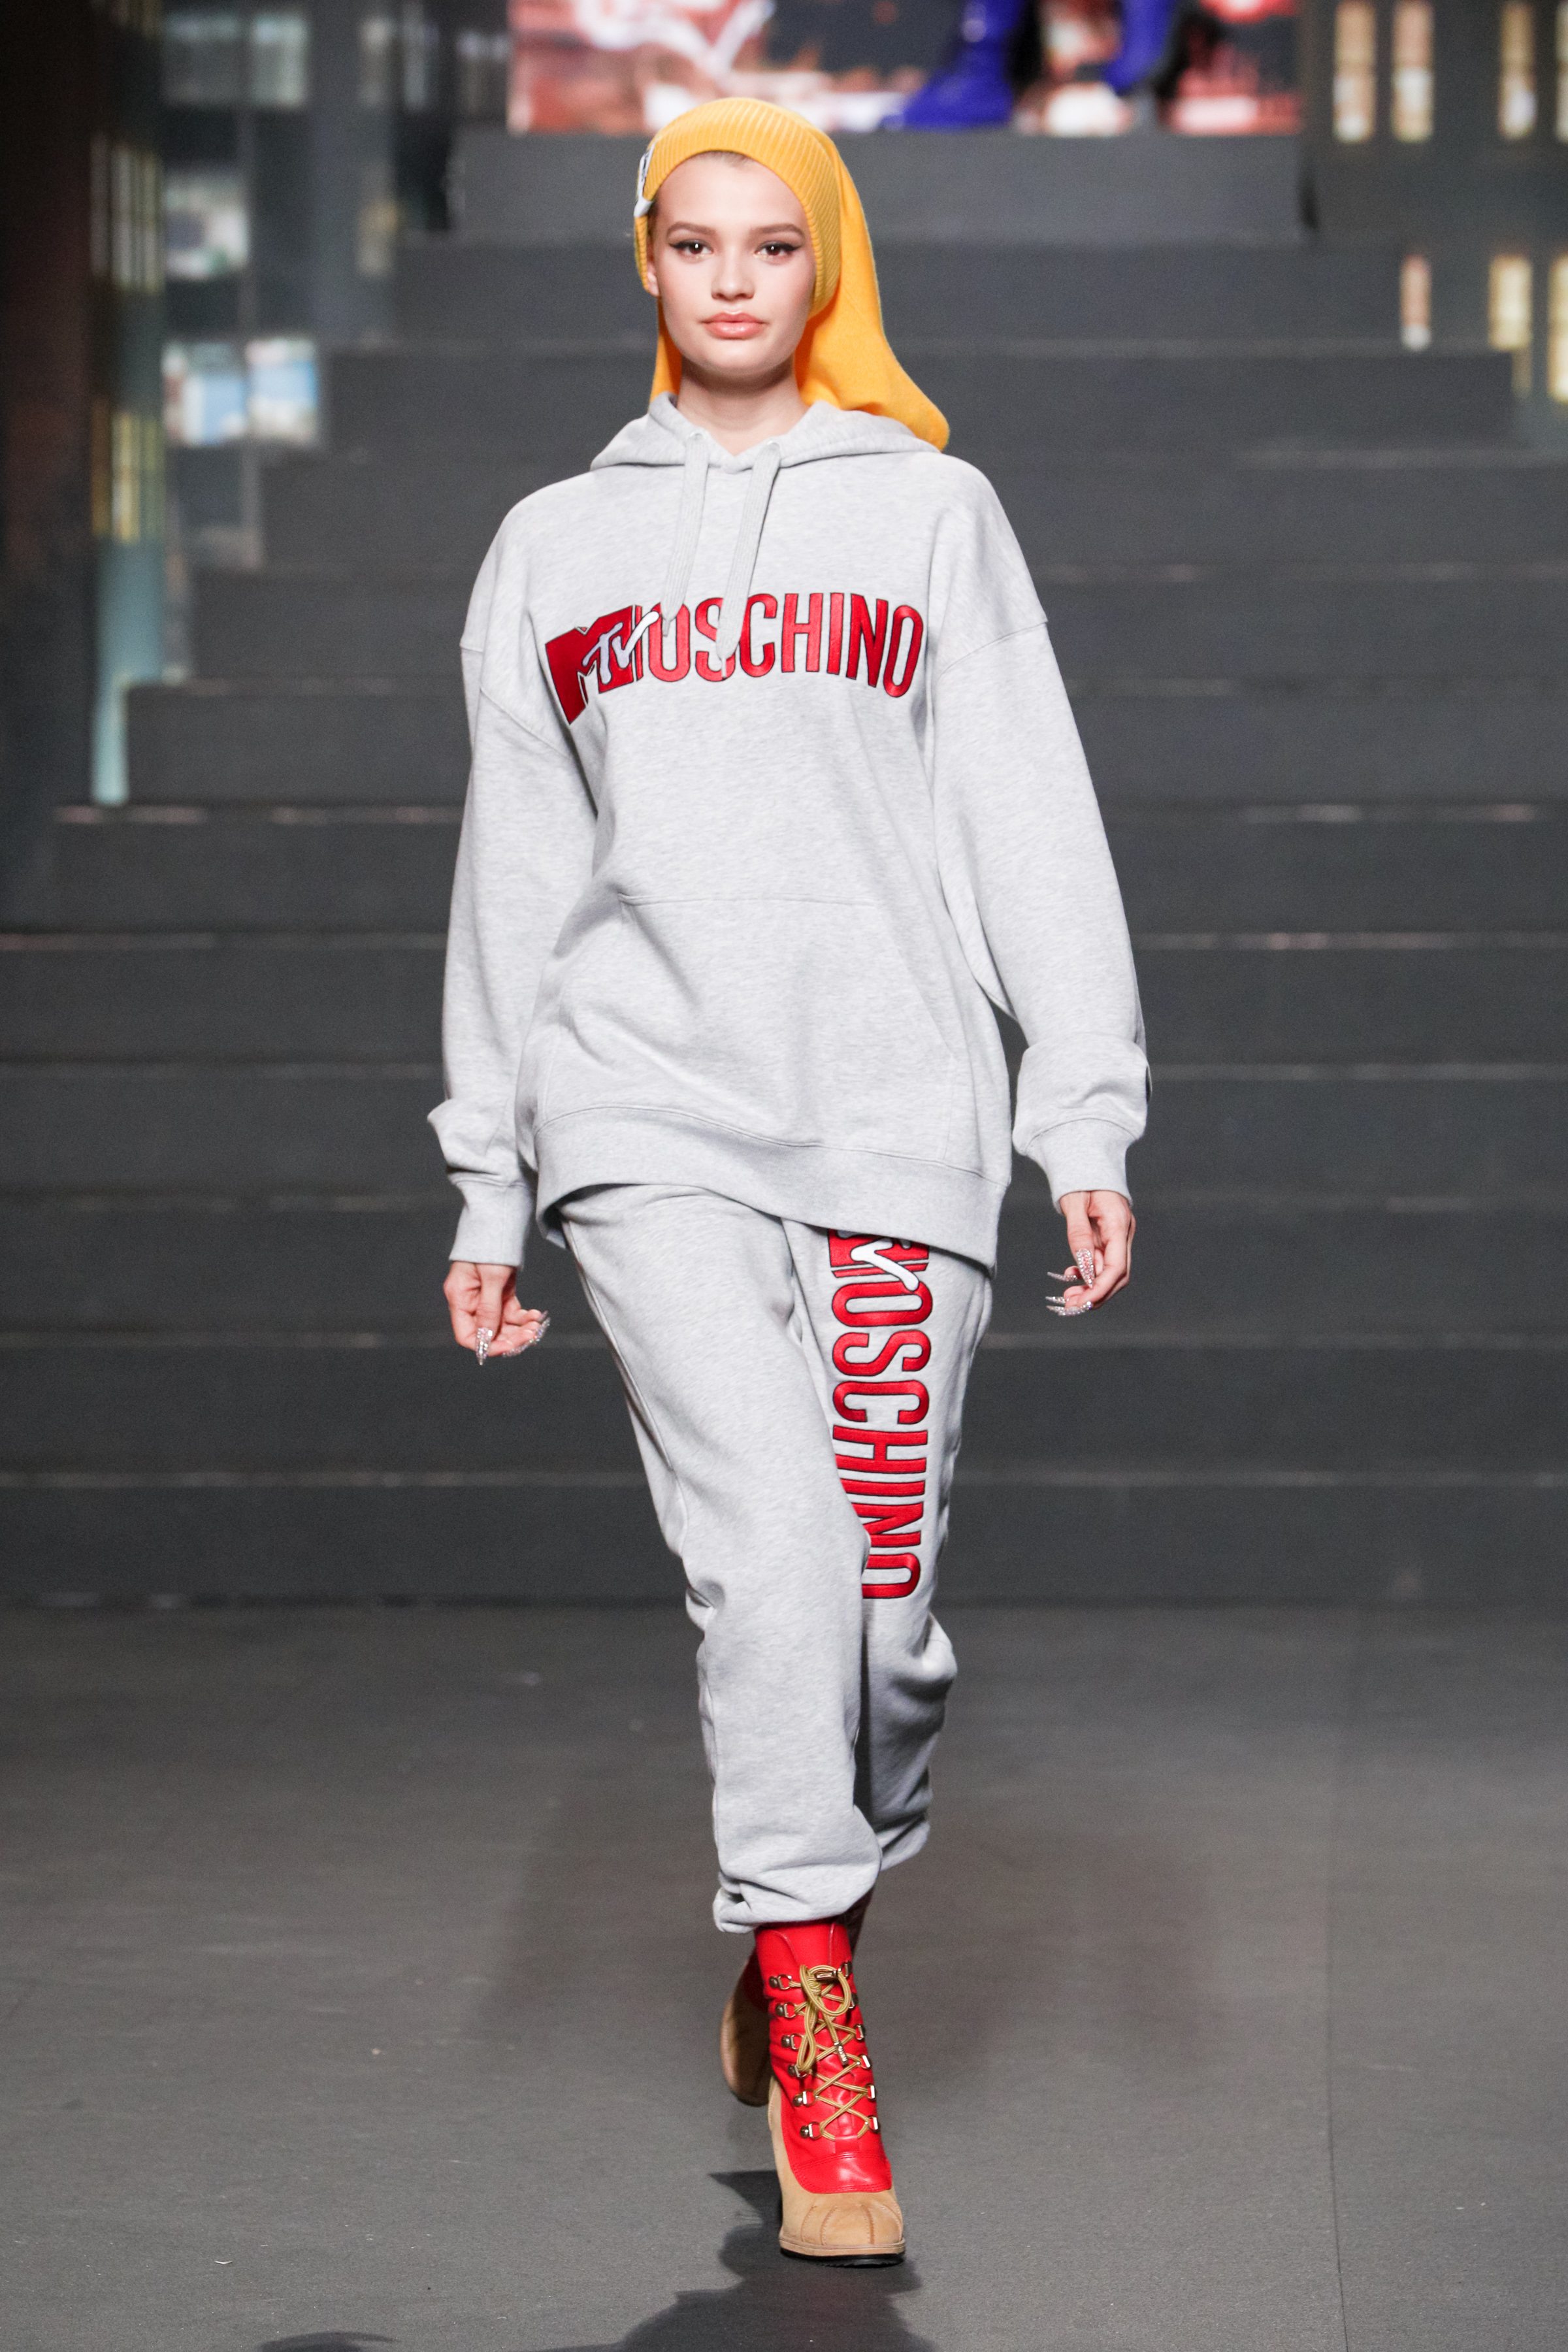 Jeremy Scott enflamme New York avec la collection Moschino [tv] x H&M